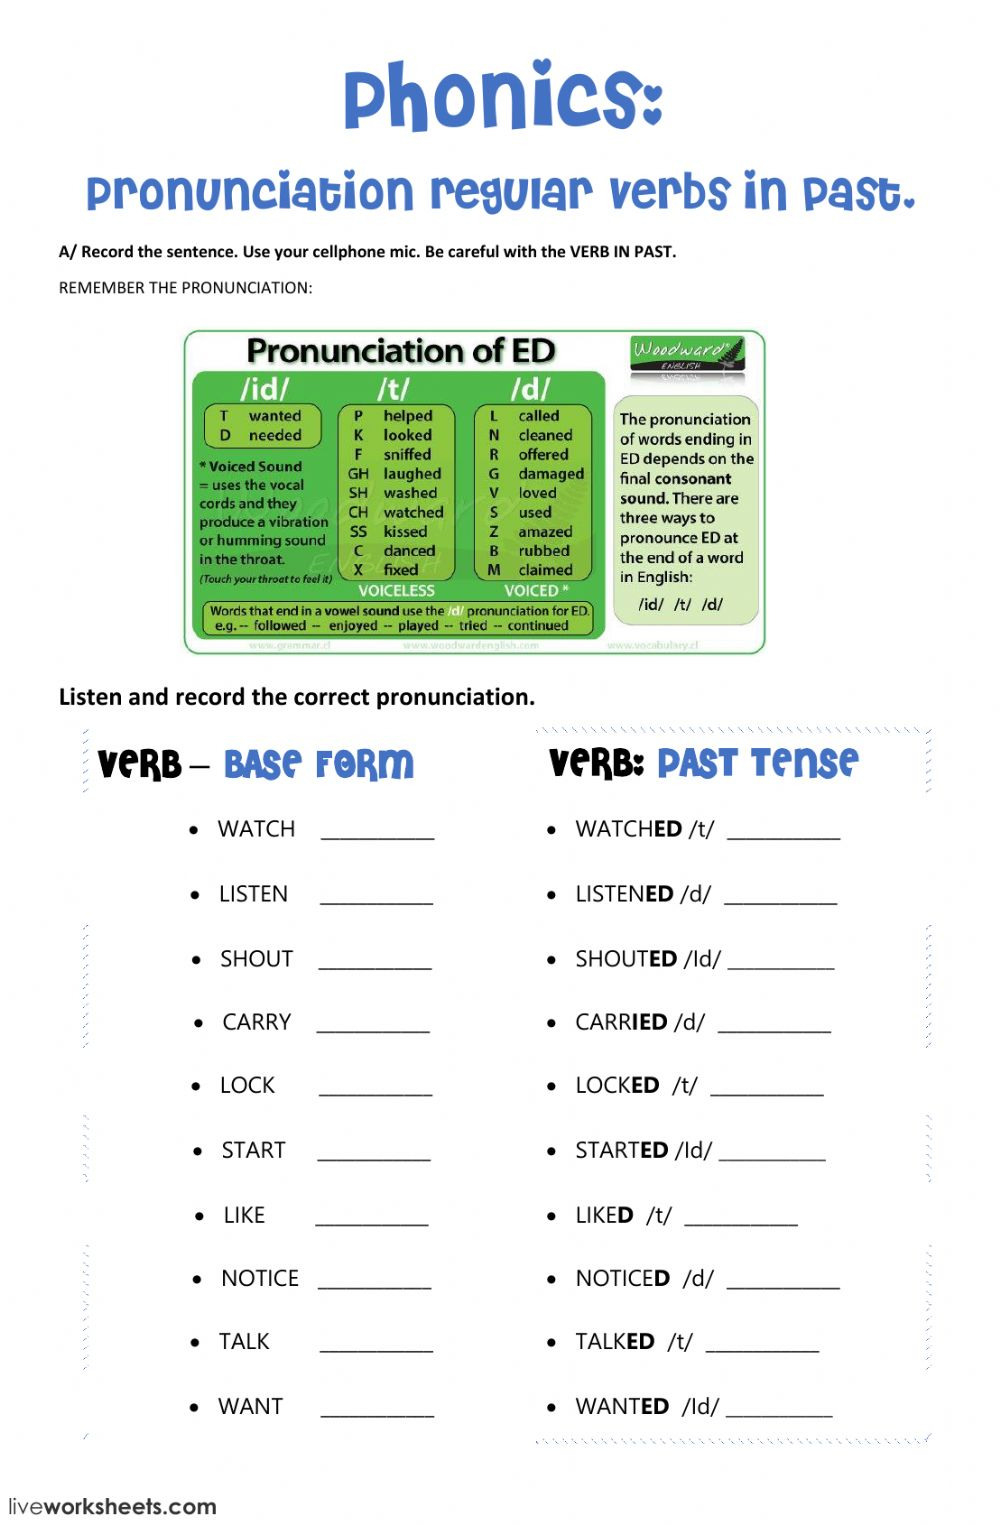 pronunciation-regular-verbs-in-past-ed-interactive-worksheet-db-excel